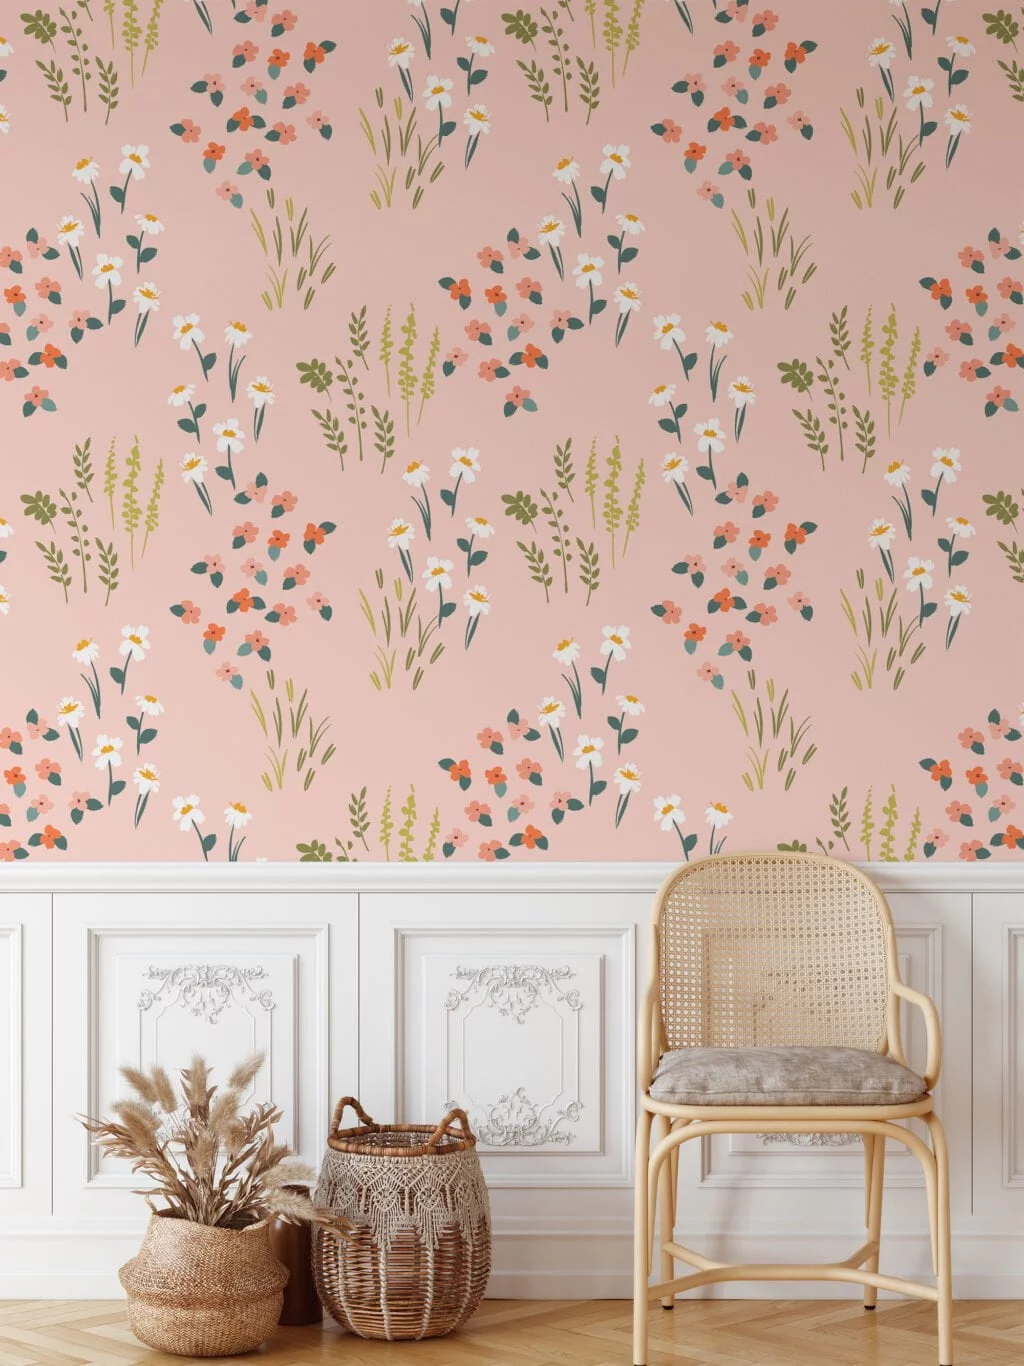 Pastel Peach Pink Flat Art Flowers Illustration Wallpaper, Delicate Wildflowers Peel & Stick Wall Mural